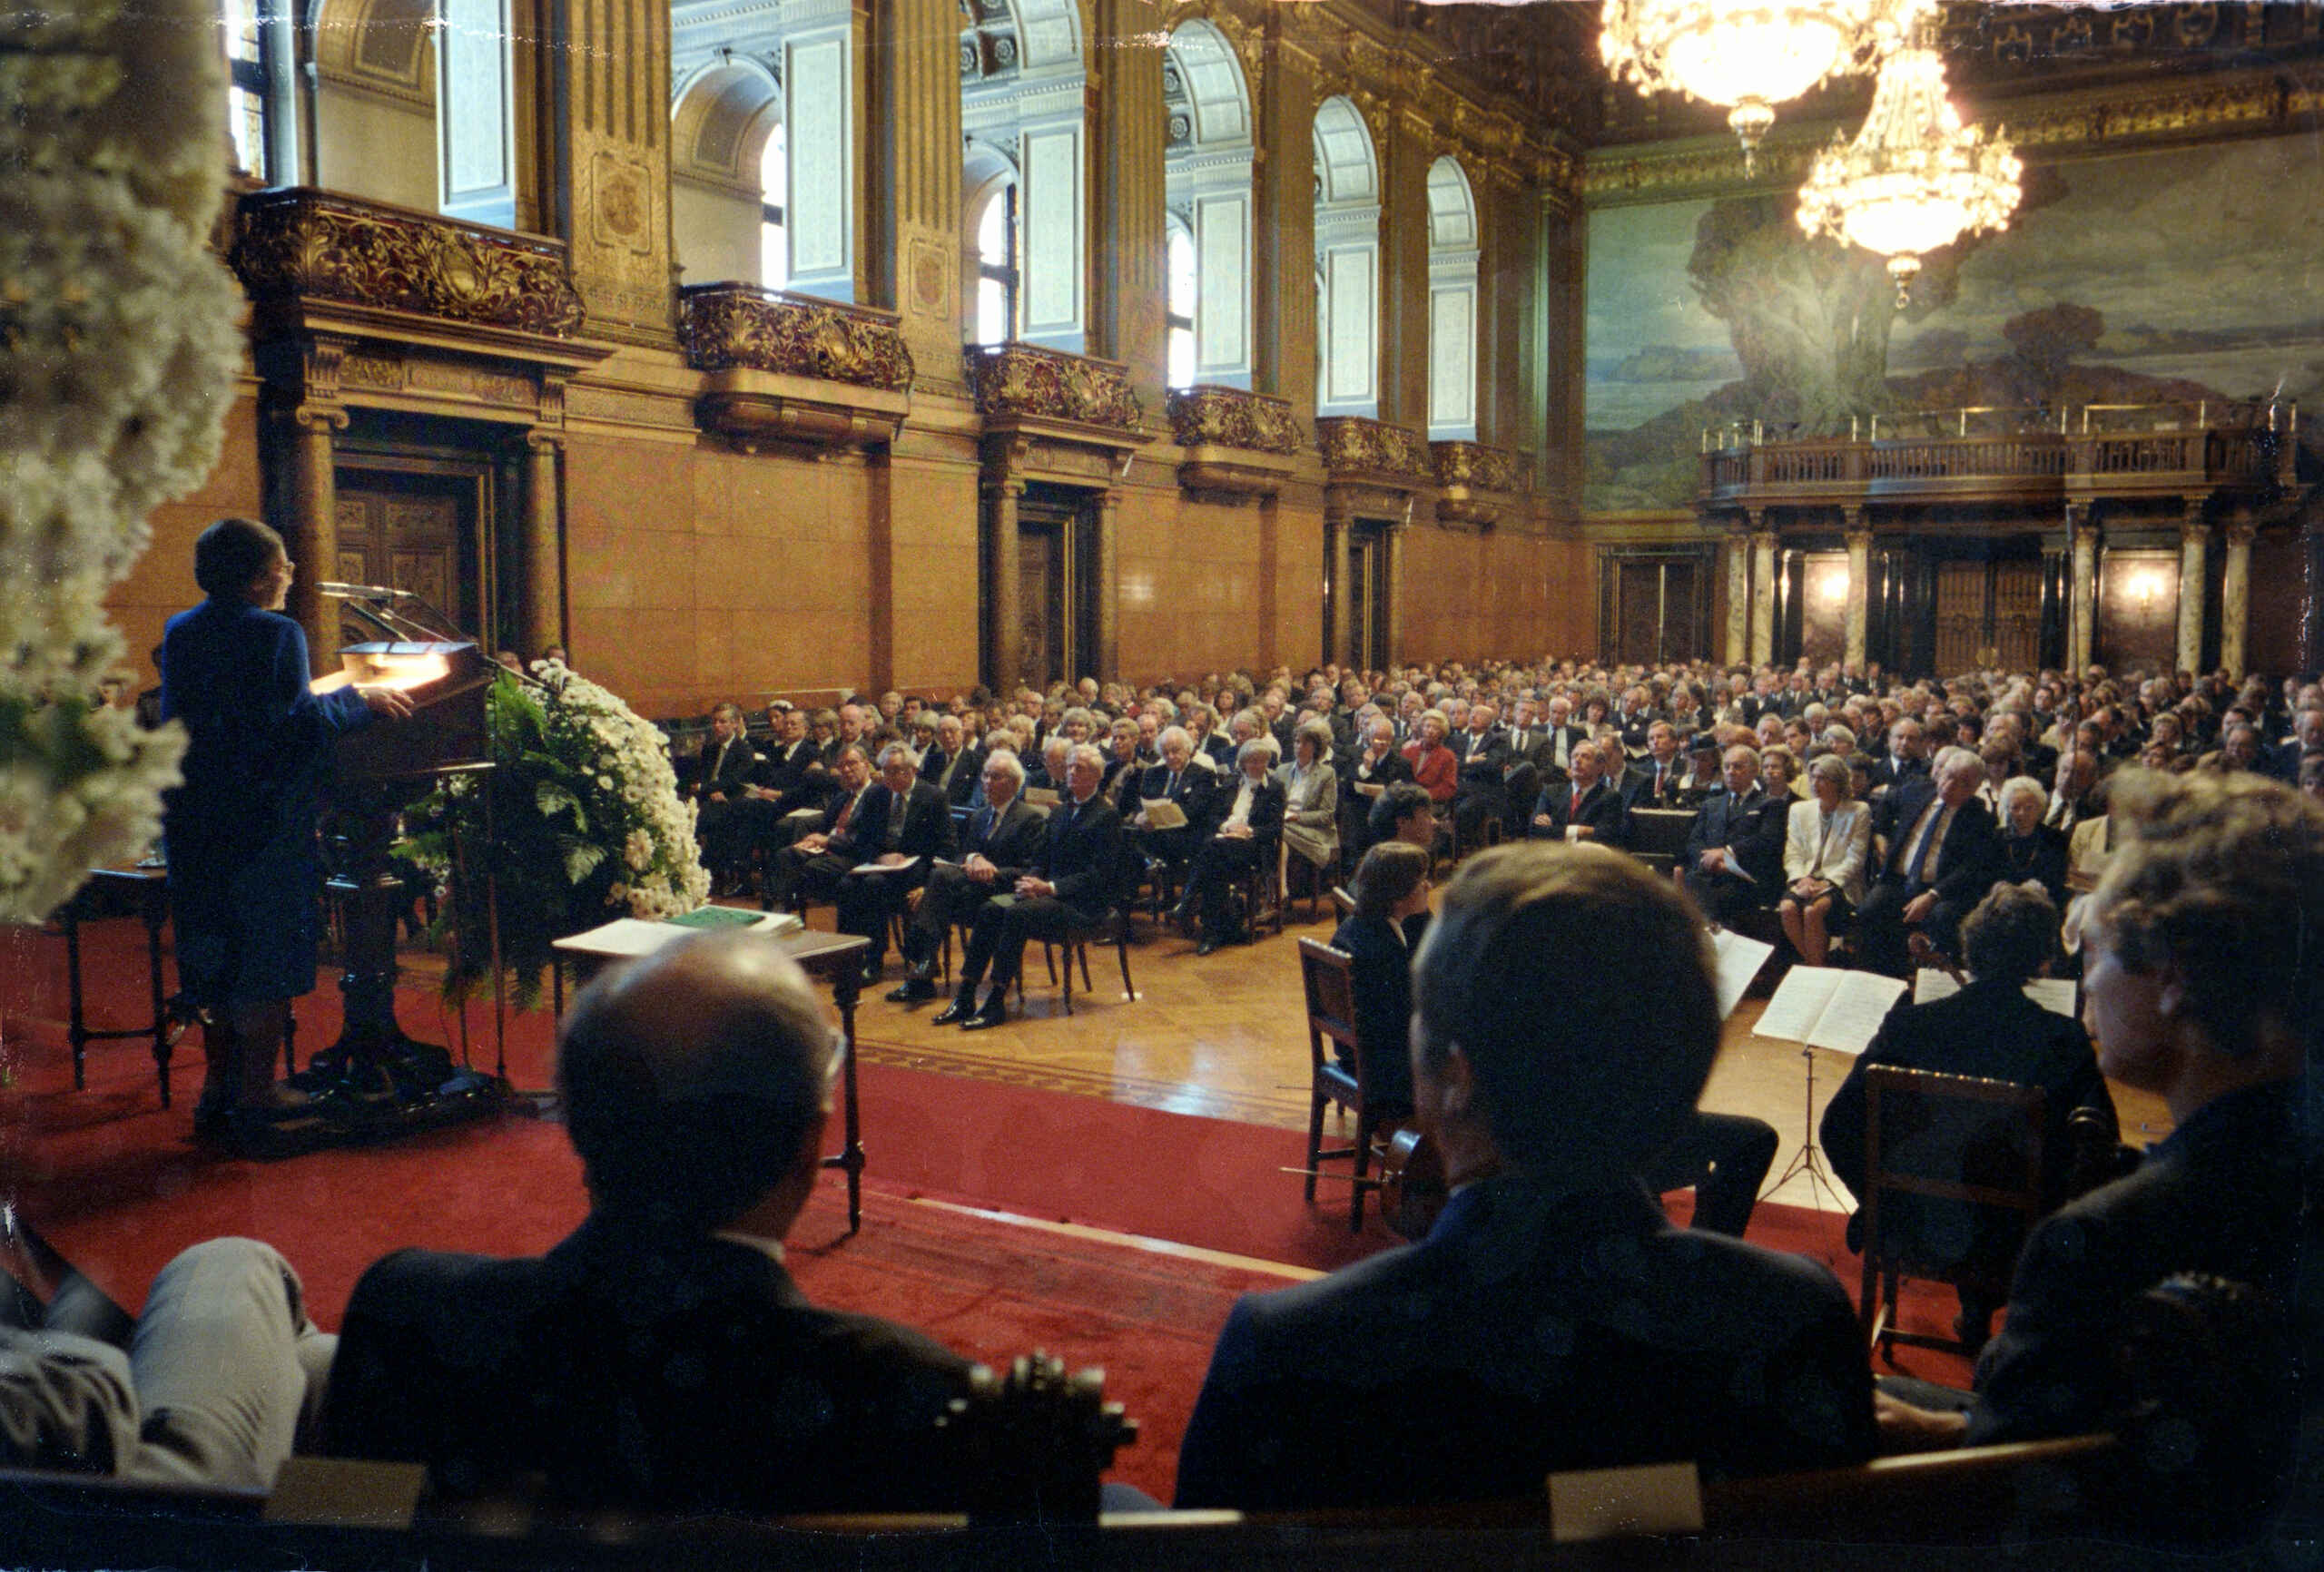 The first award ceremony in 1985 at Hamburg city hall